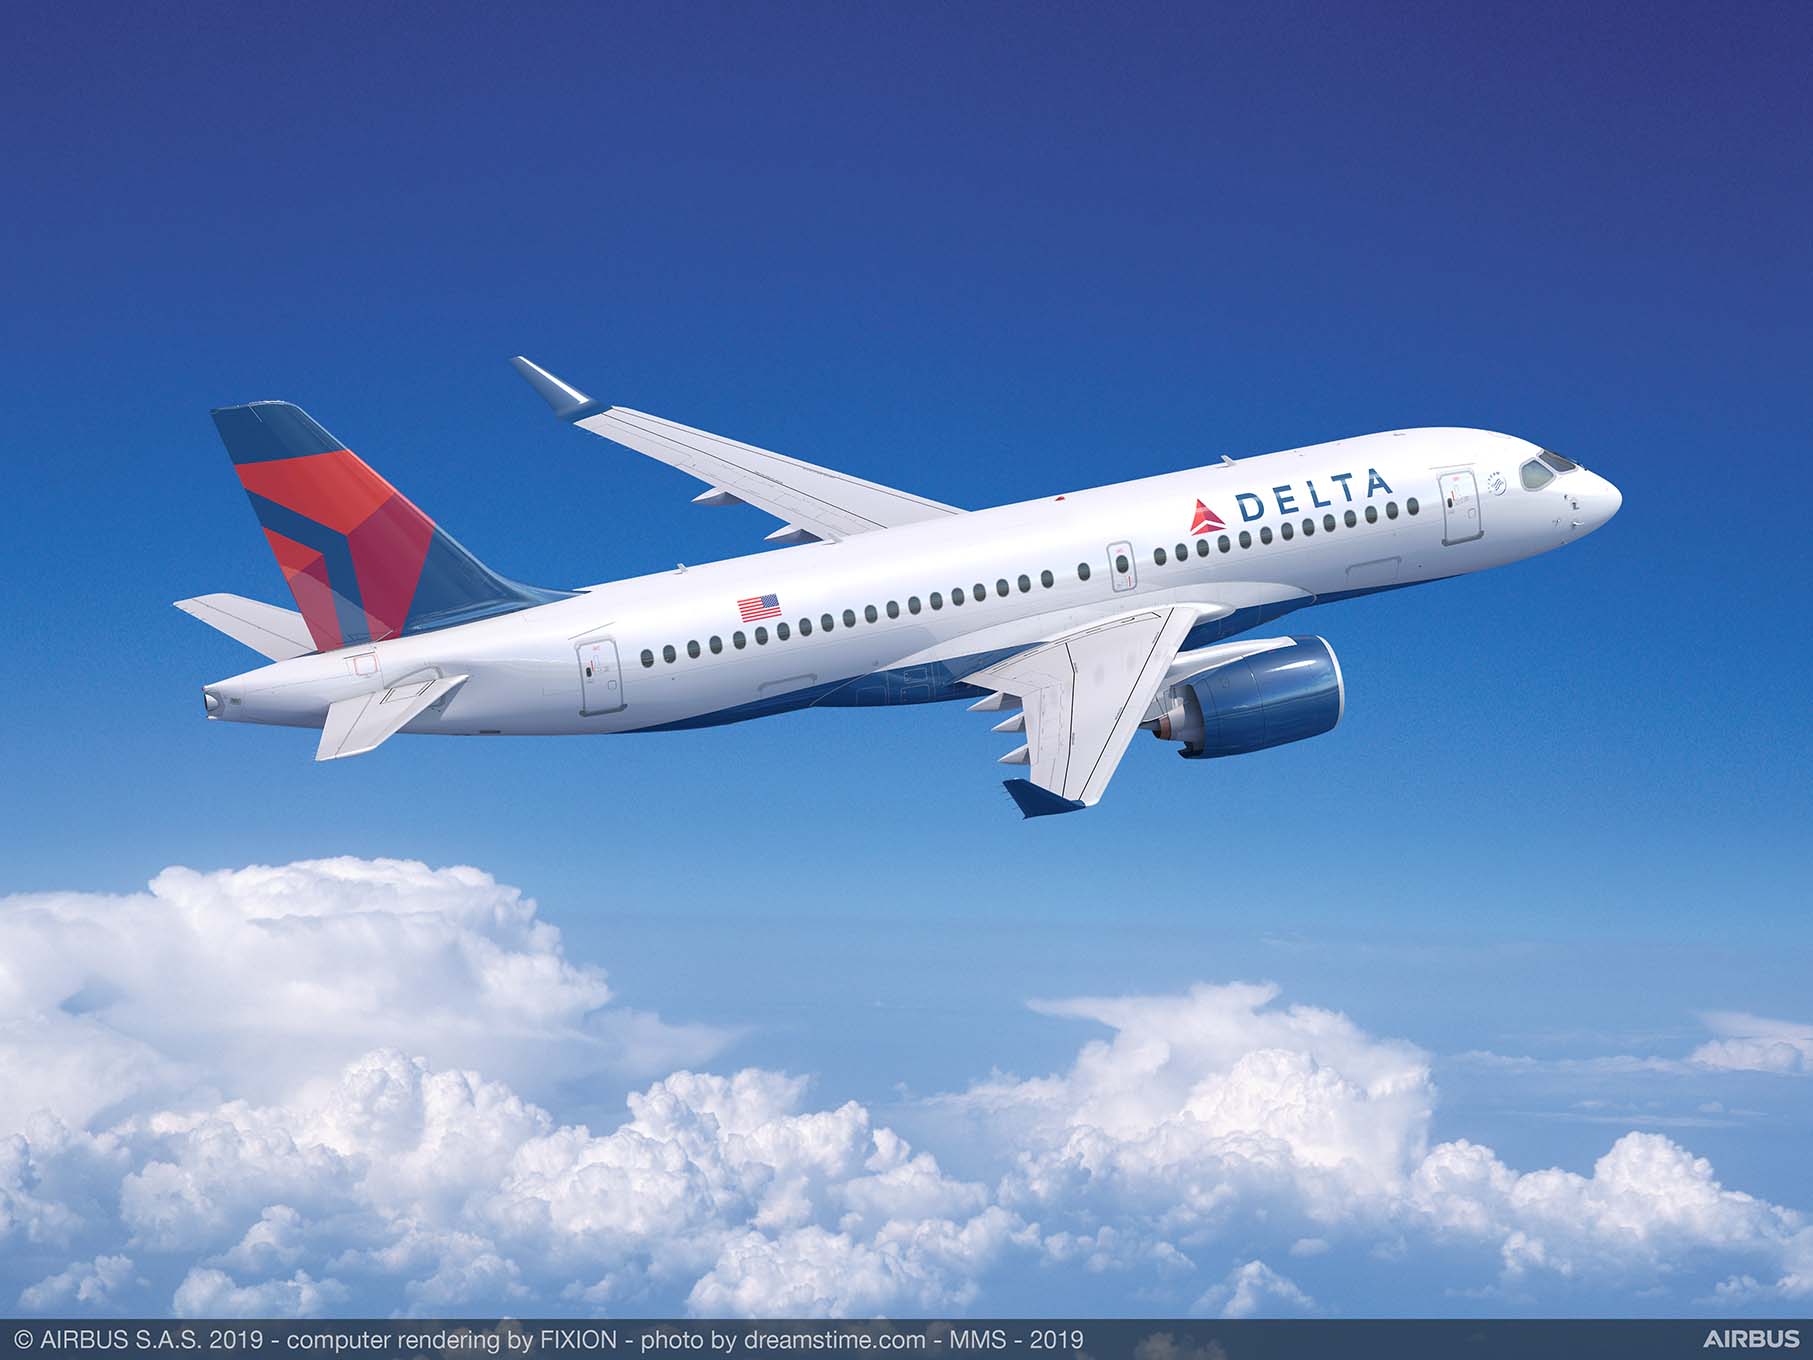 Delta Airlines posts quarterly profits rise of 39%